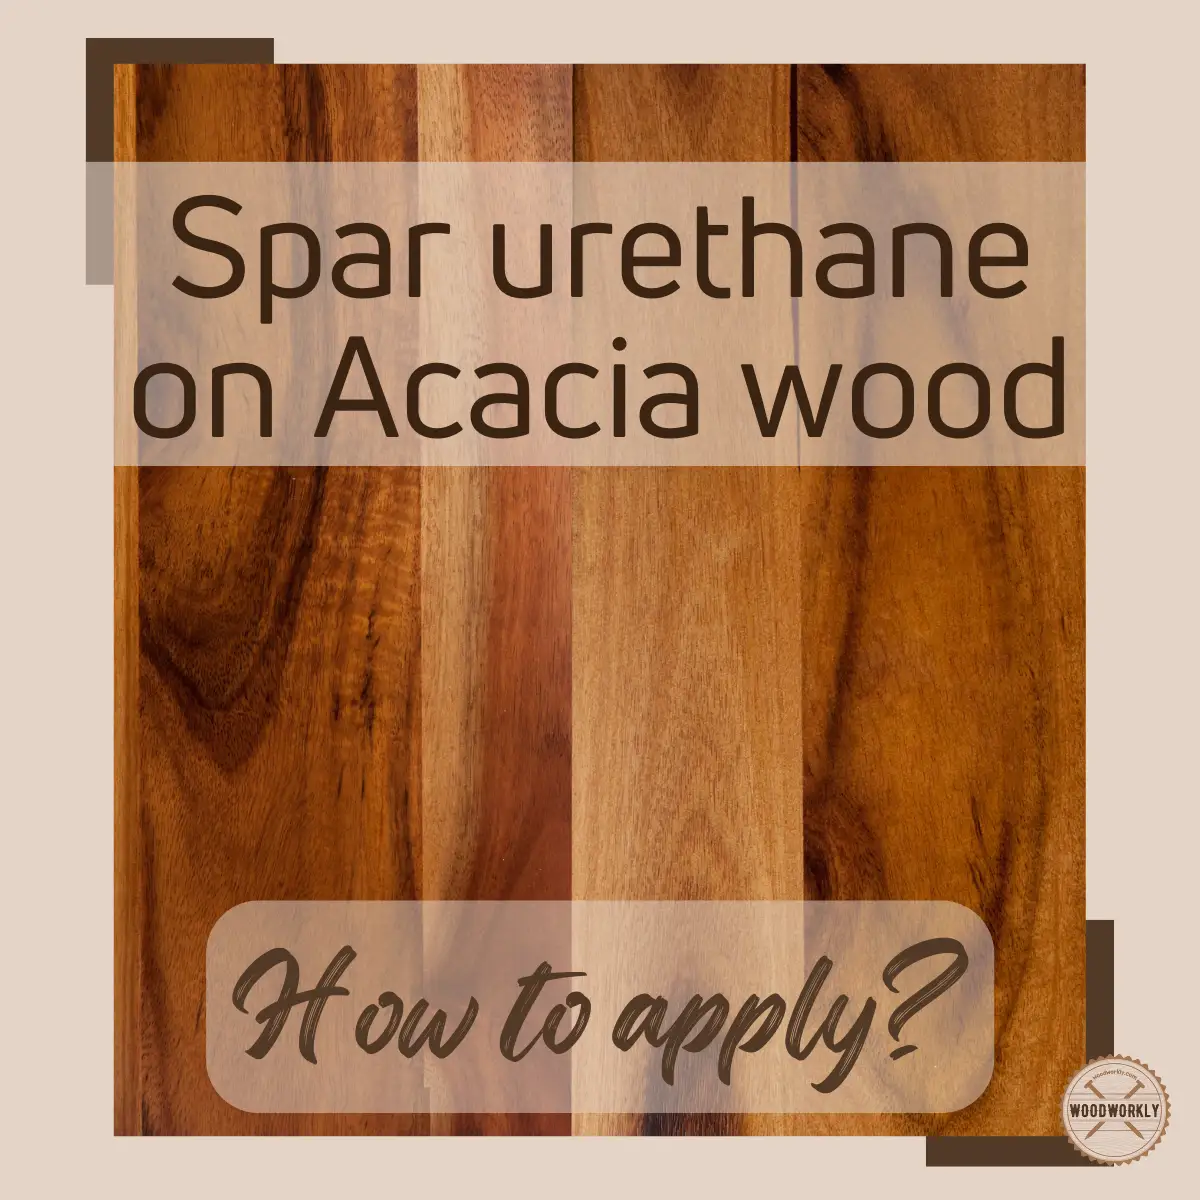 spar urethane on acacia wood